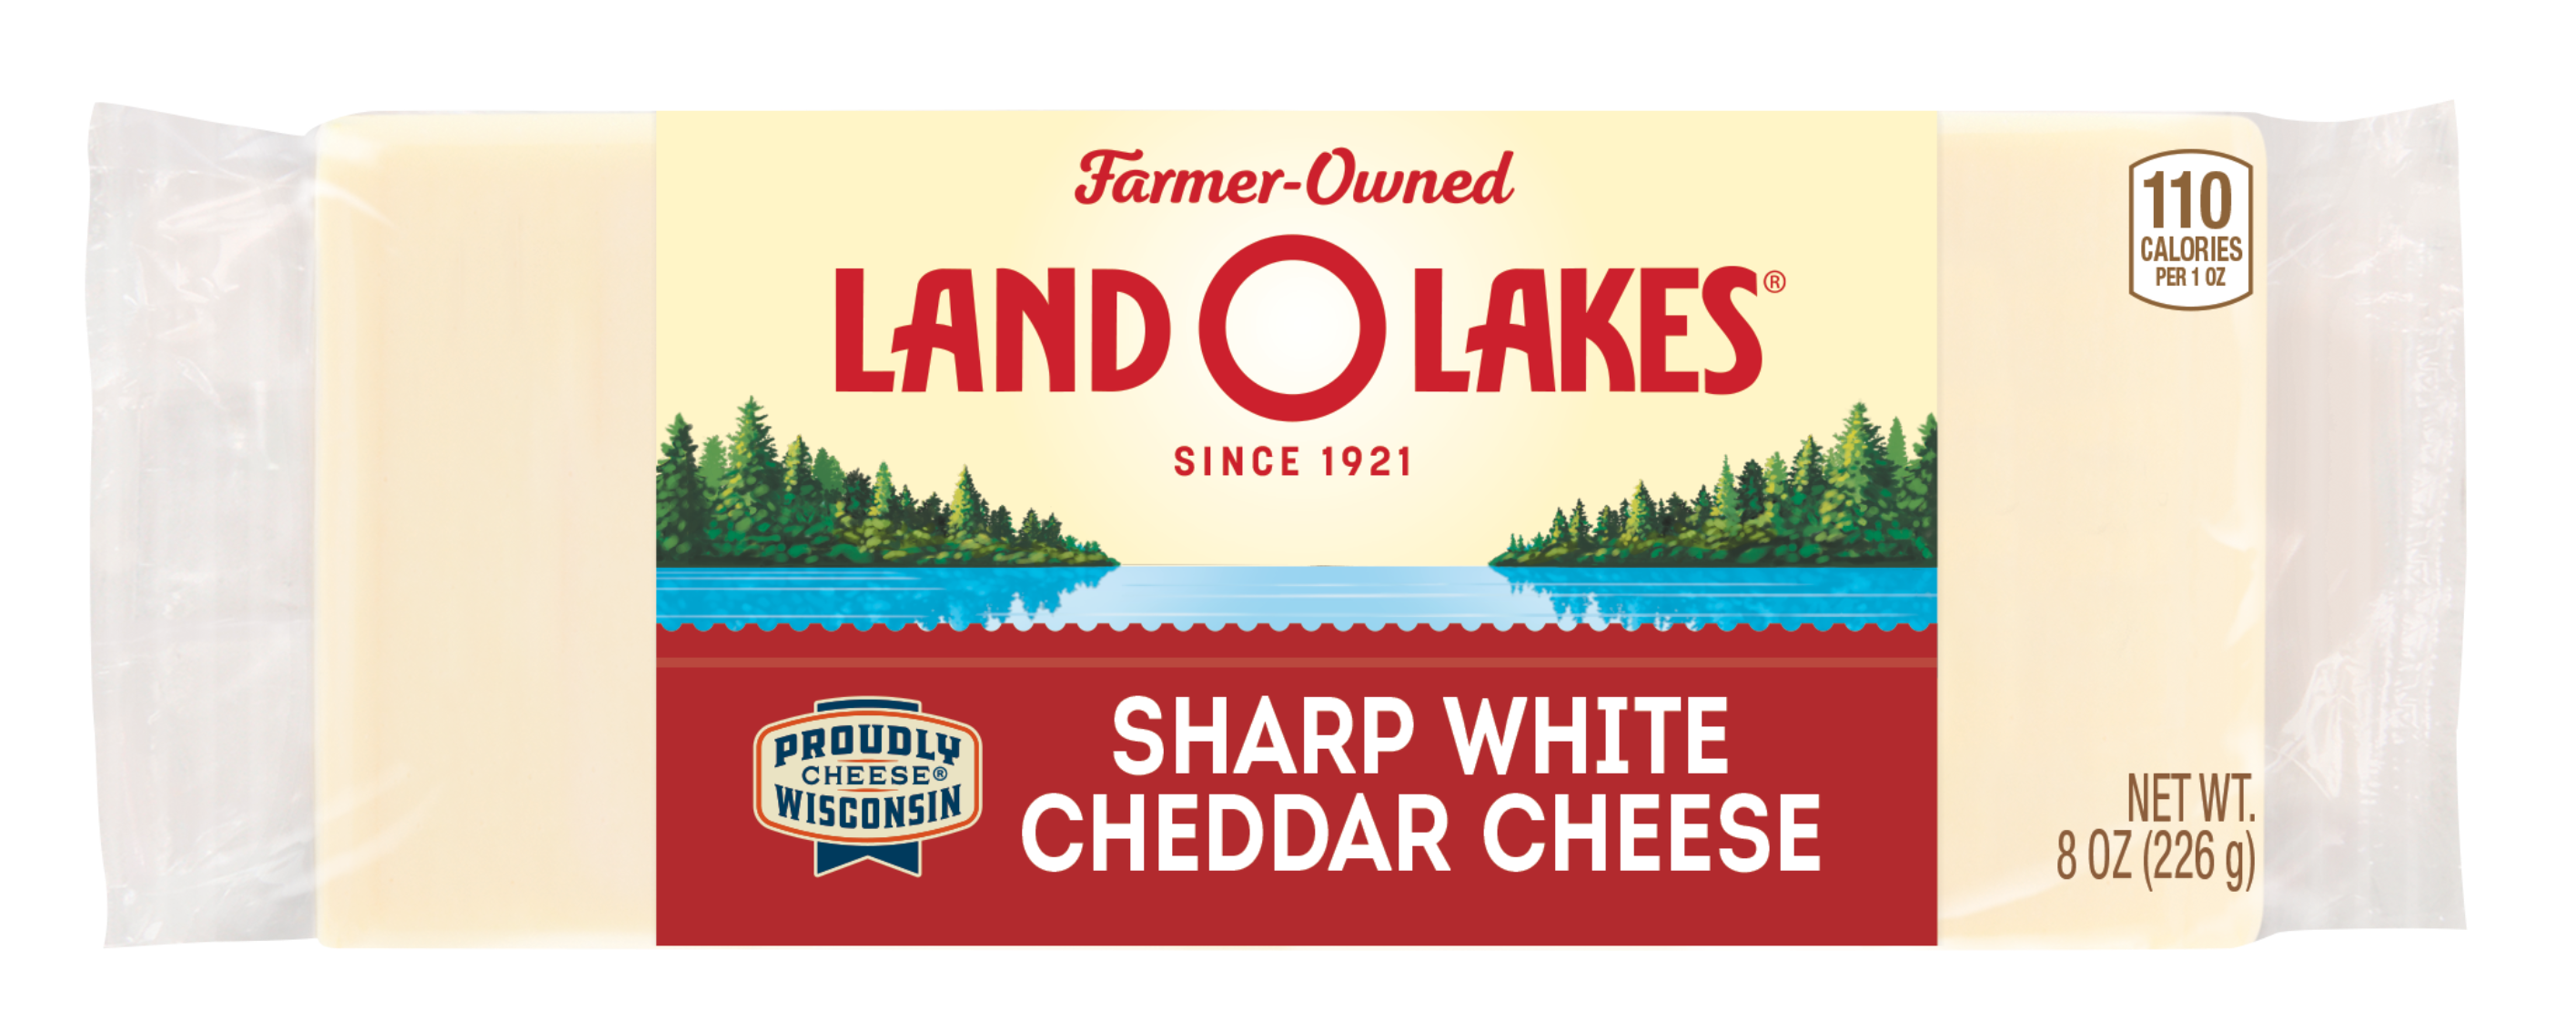 Land O'Lakes sharp white cheddar cheese